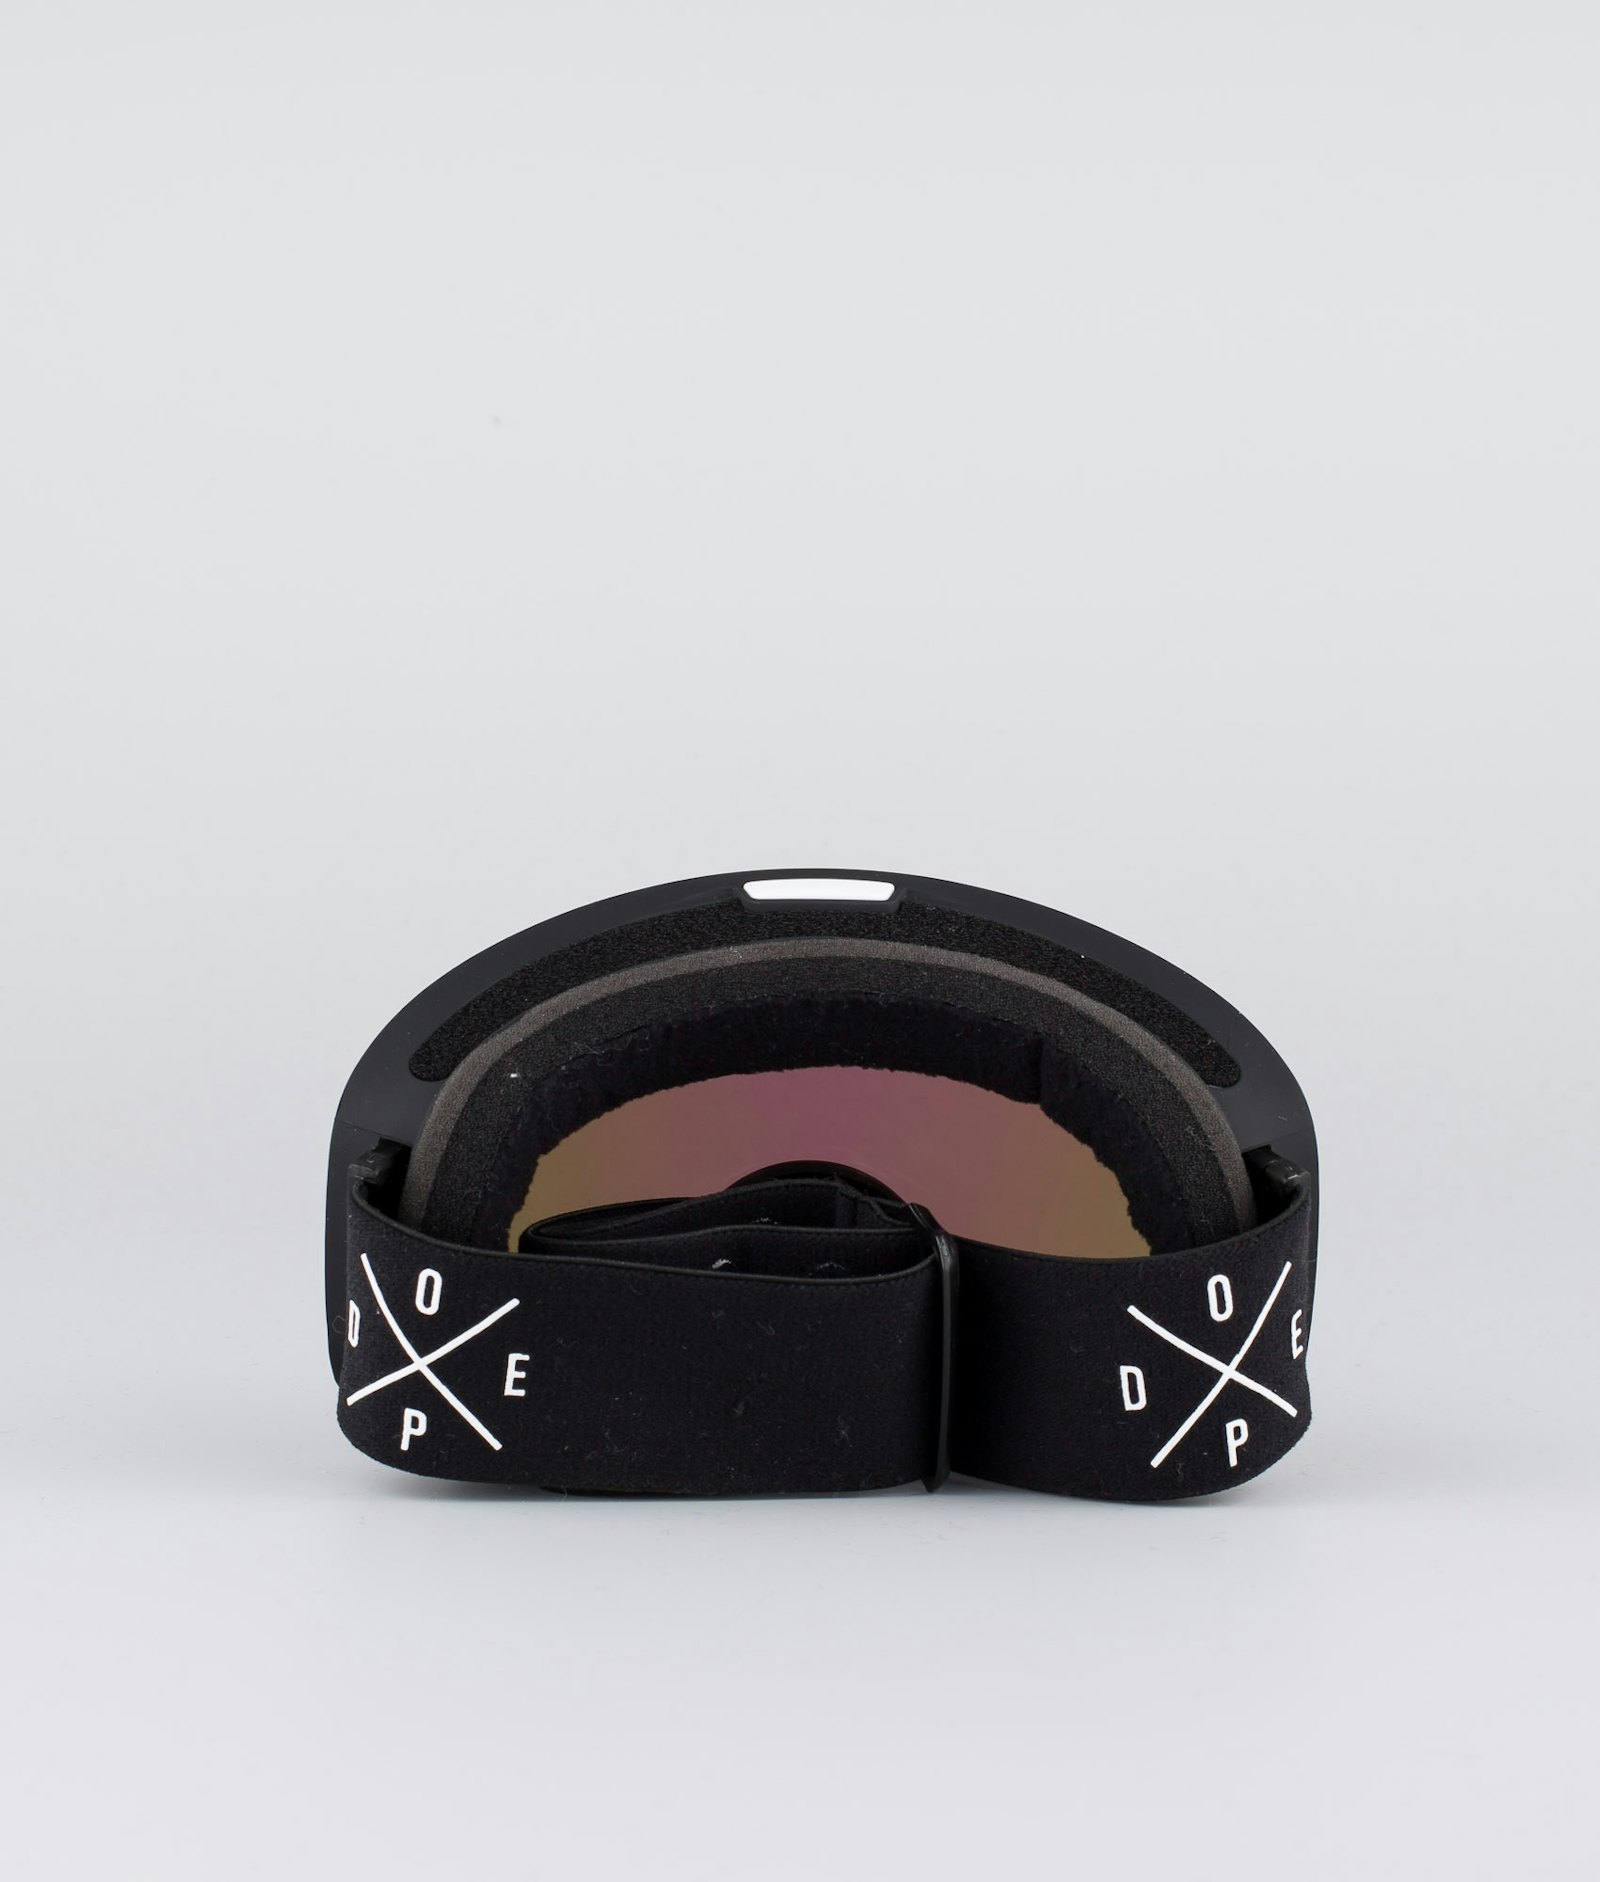 Dope Flush 2X-UP Ski Goggles Black W/Black Green Mirror